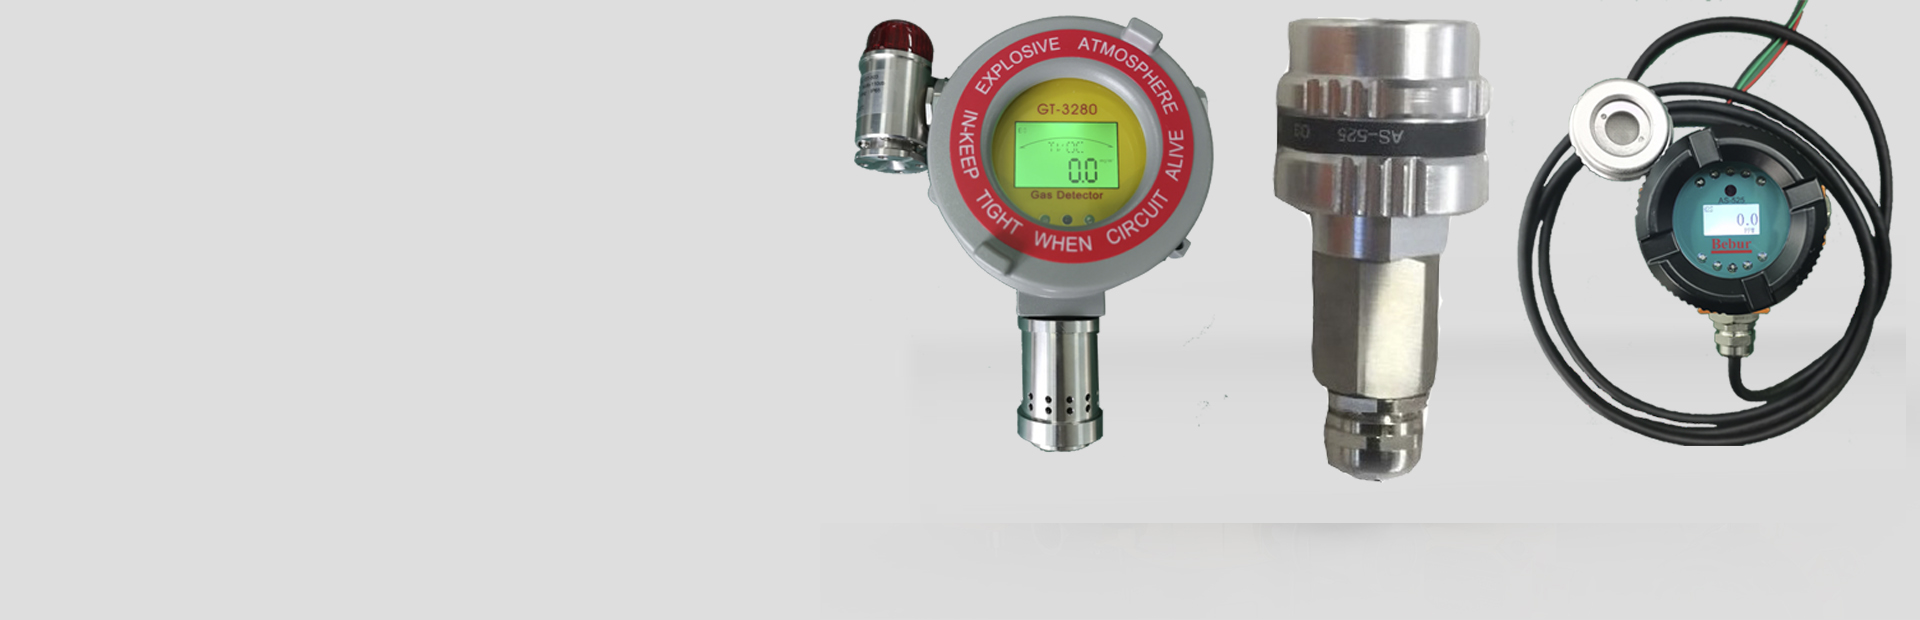 BT6108-PH水质分析仪系列产品